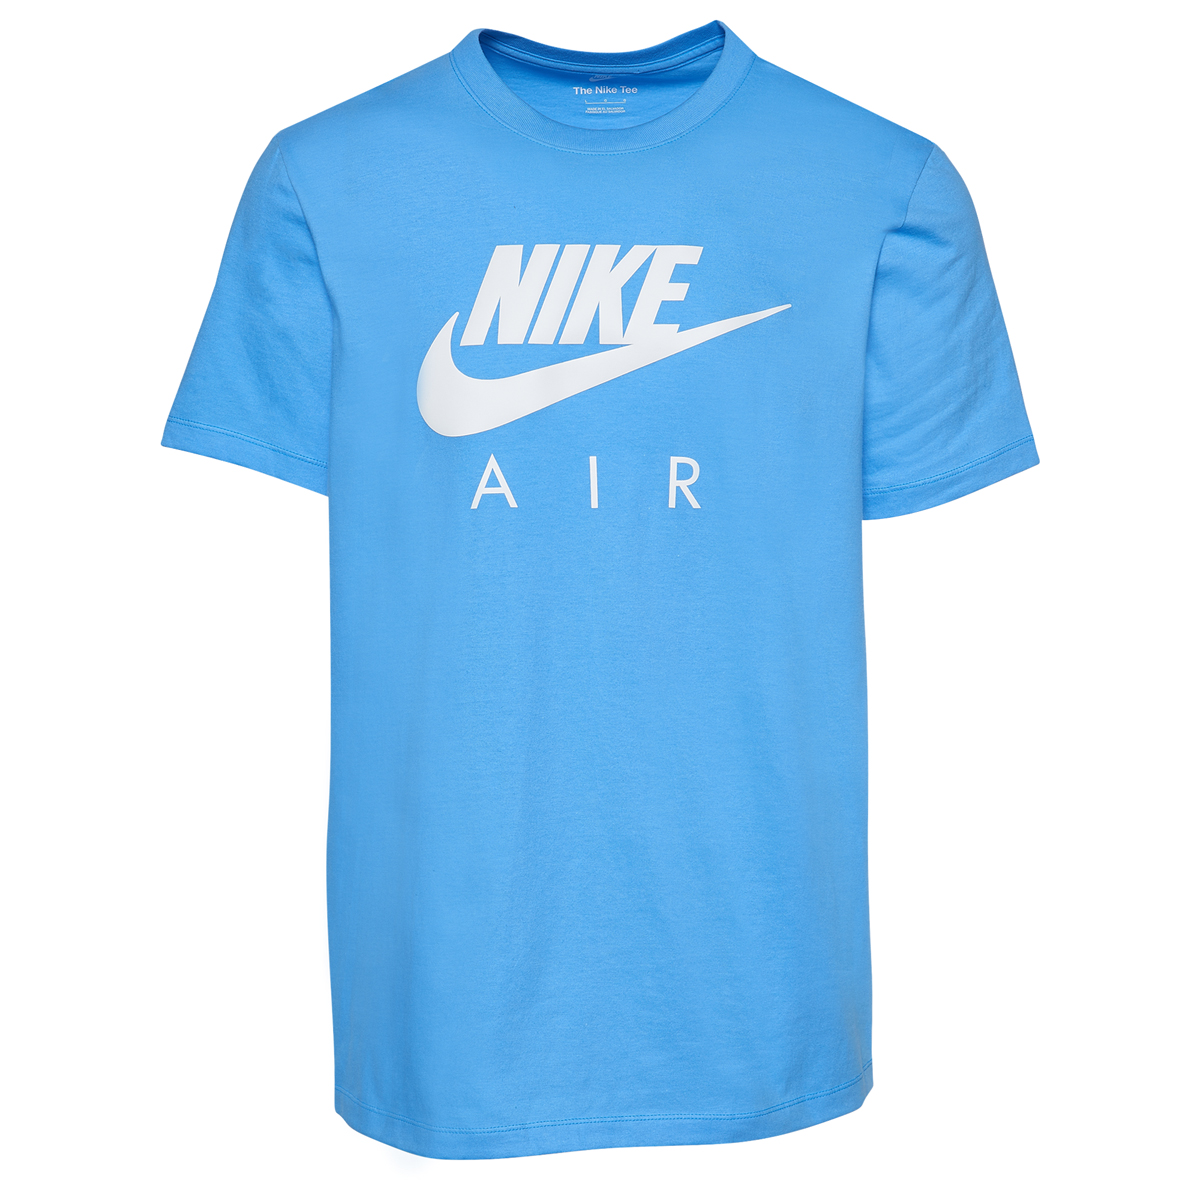 Nike-Air-Reflective-T-Shirt-Carolina-Blue